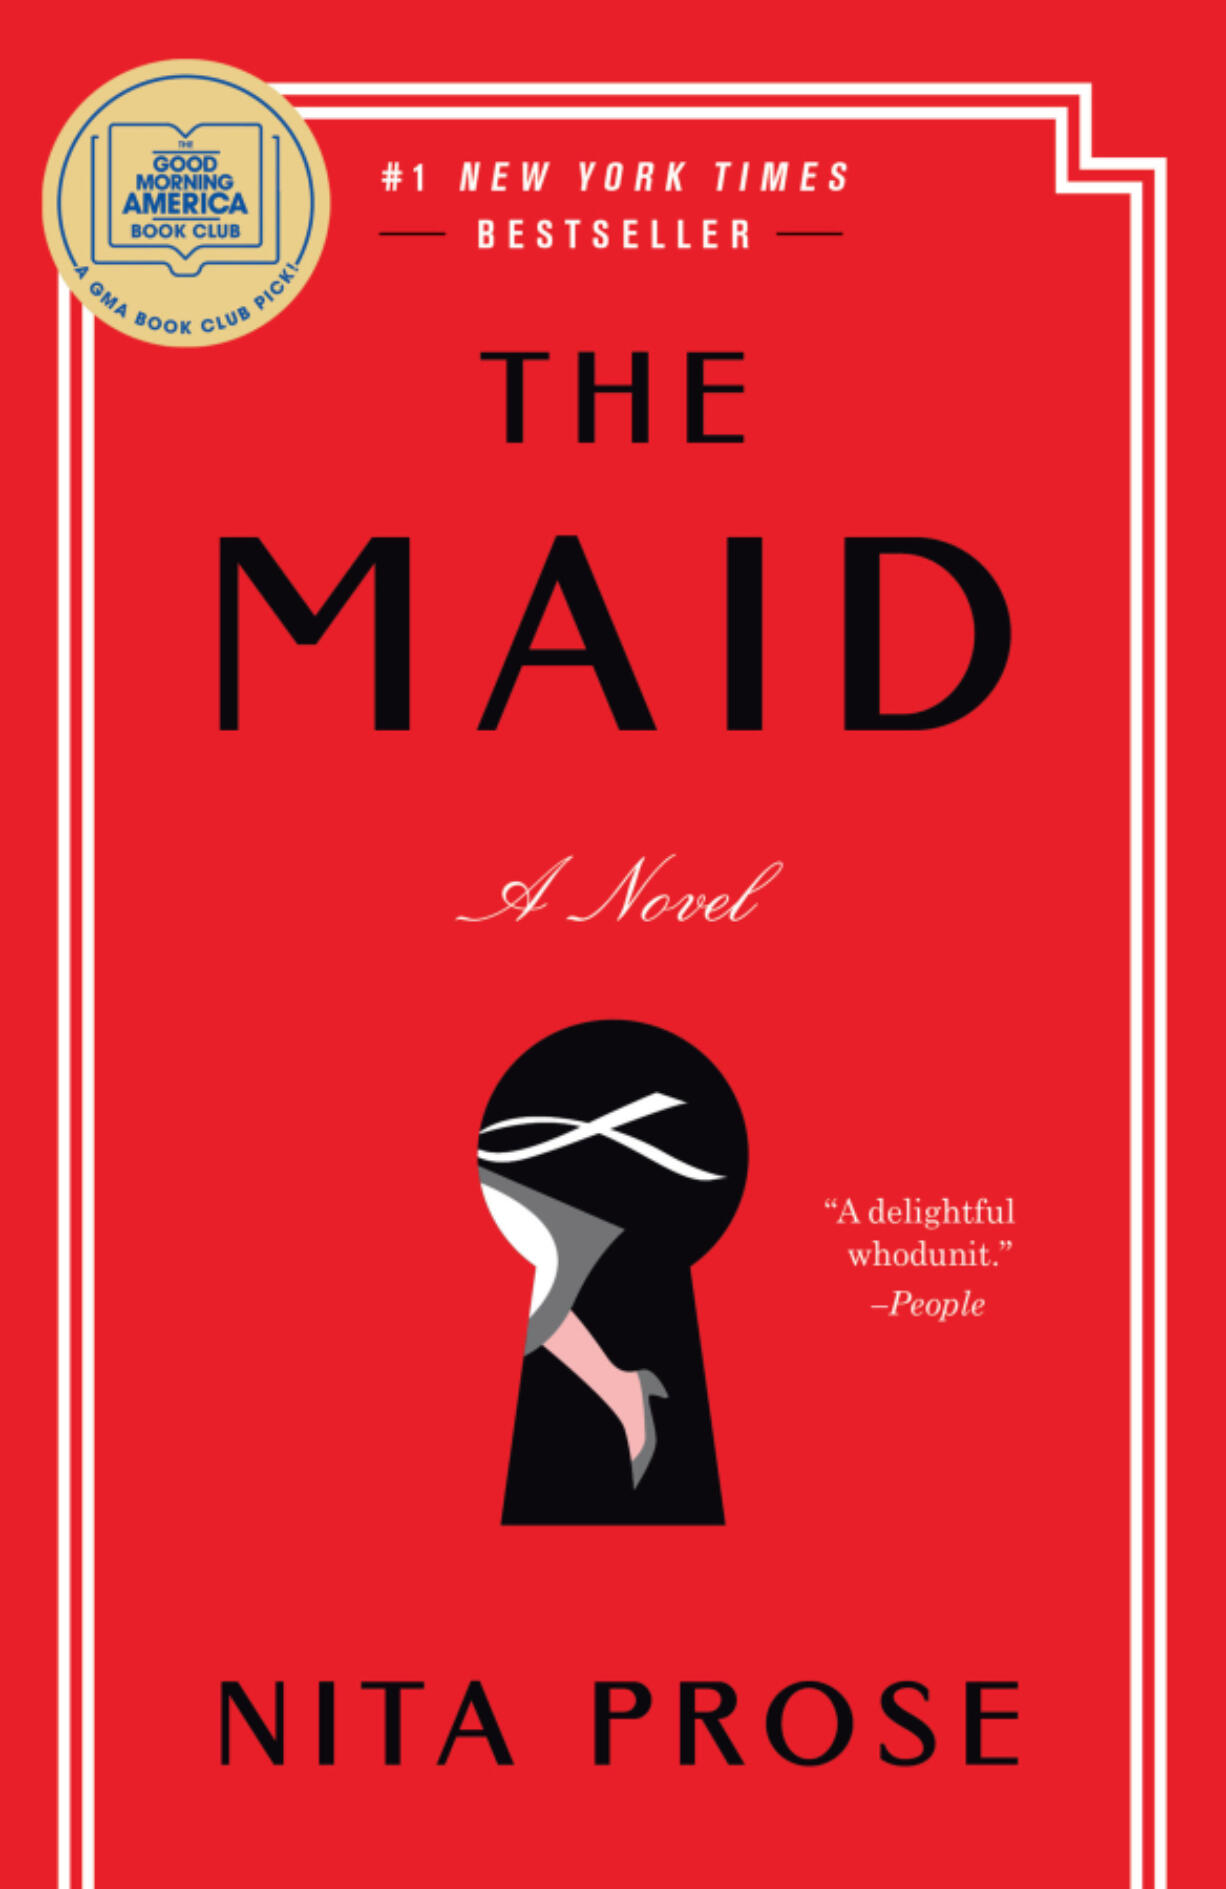 "The Maid" by Nita Prose.